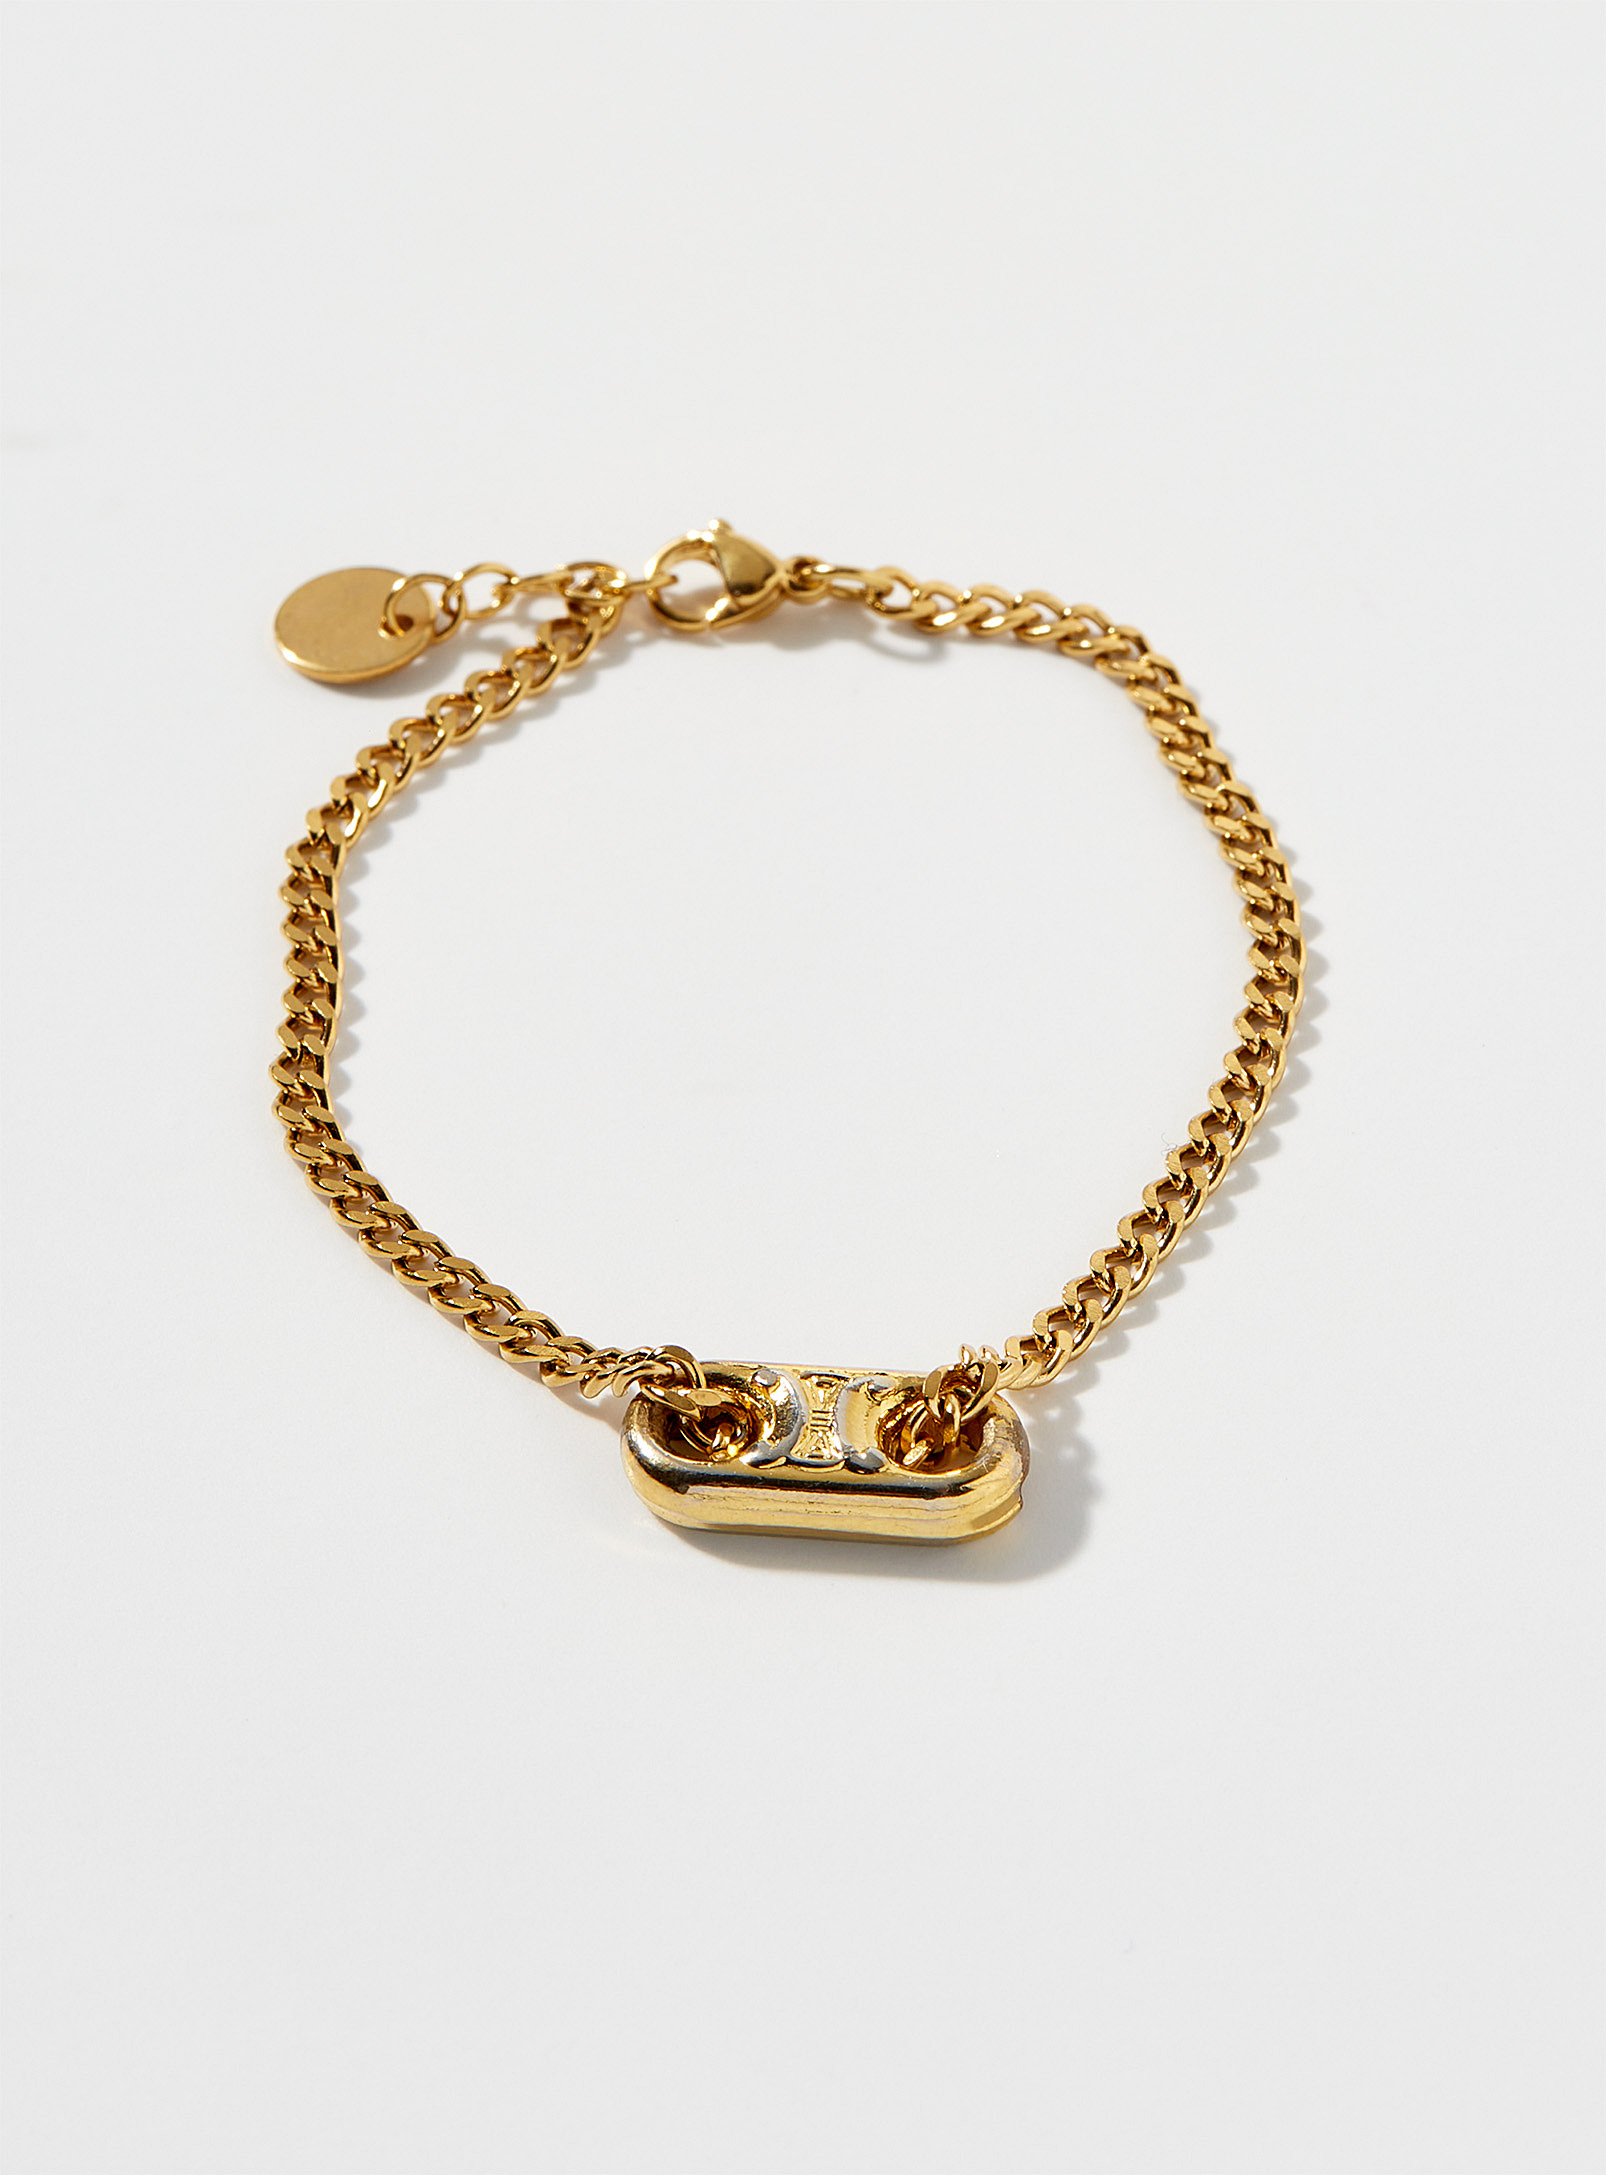 Luxury Story - Women's Celine charm upcycled bracelet